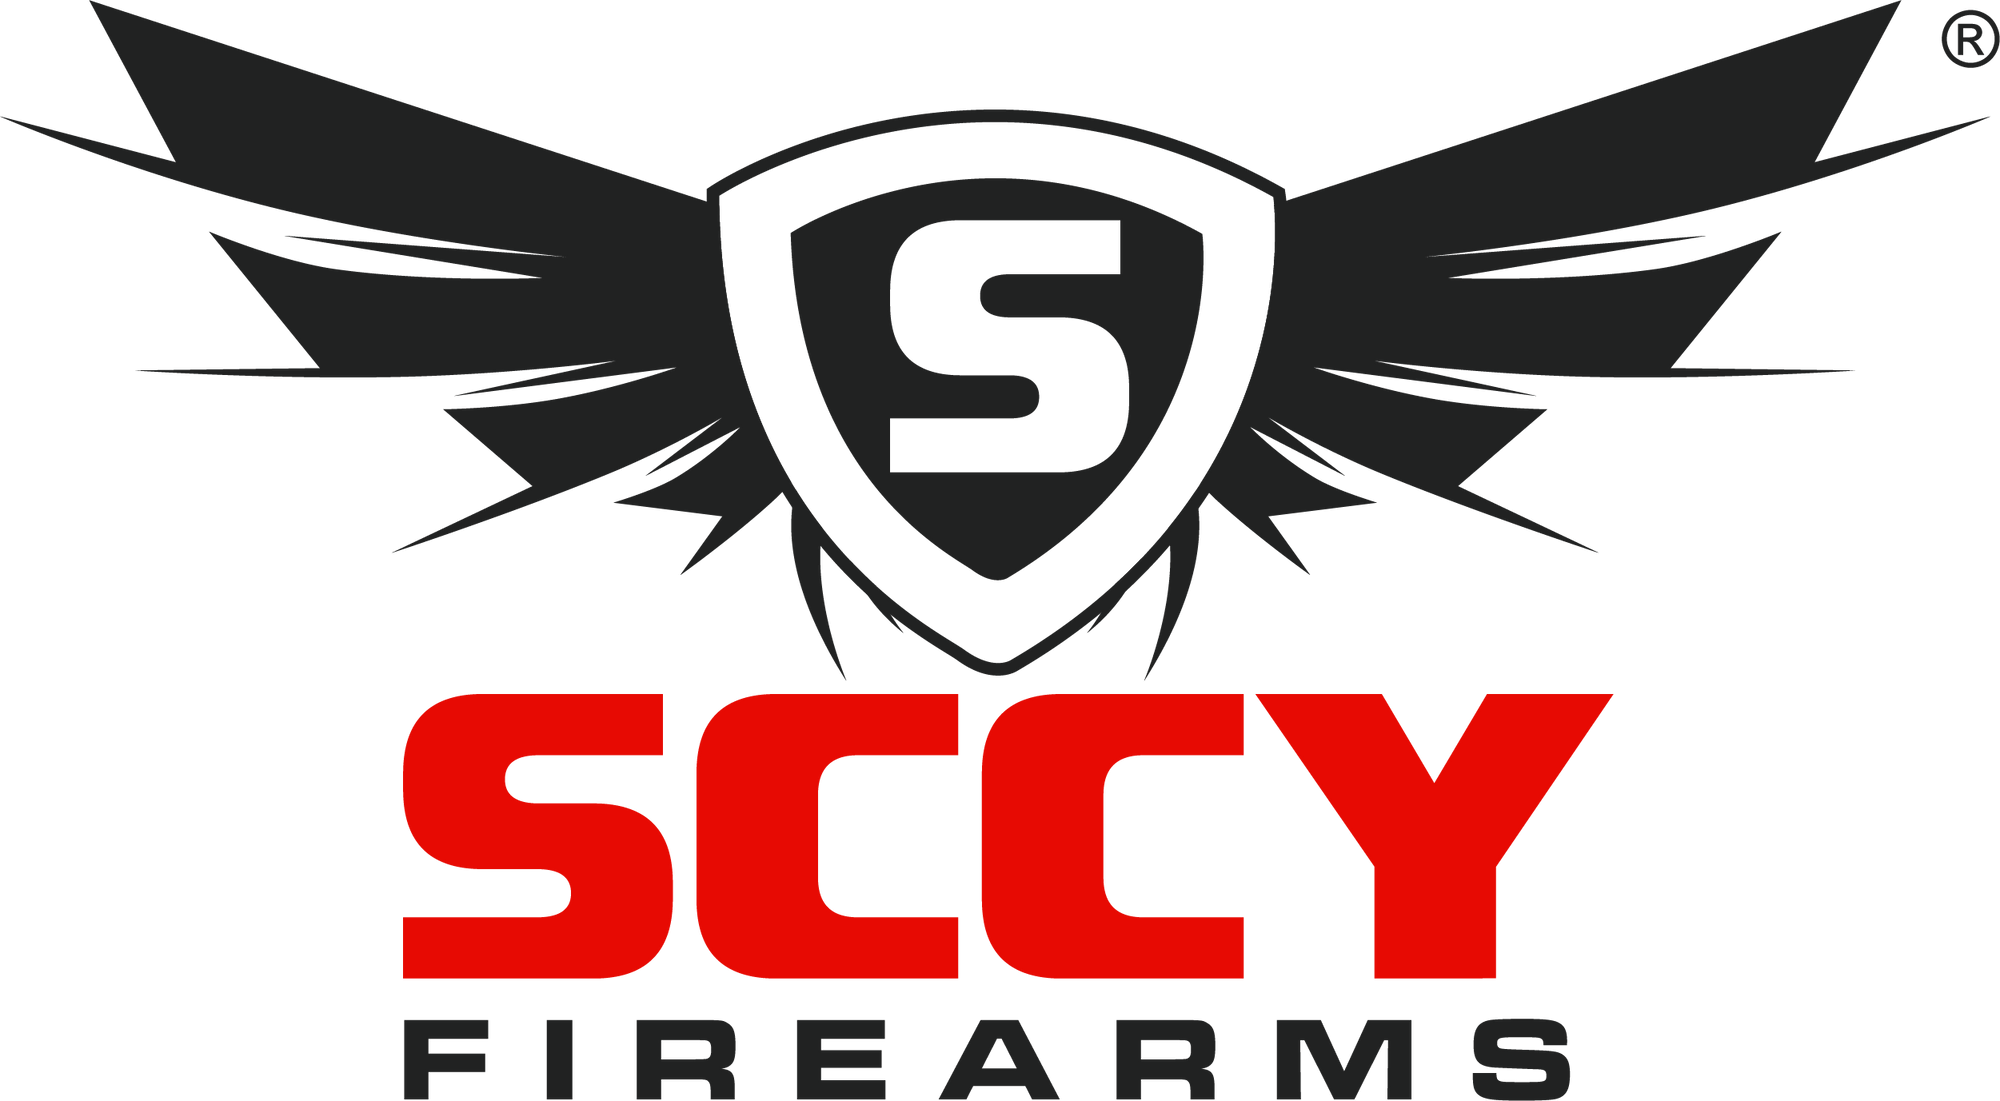 SCCY logo